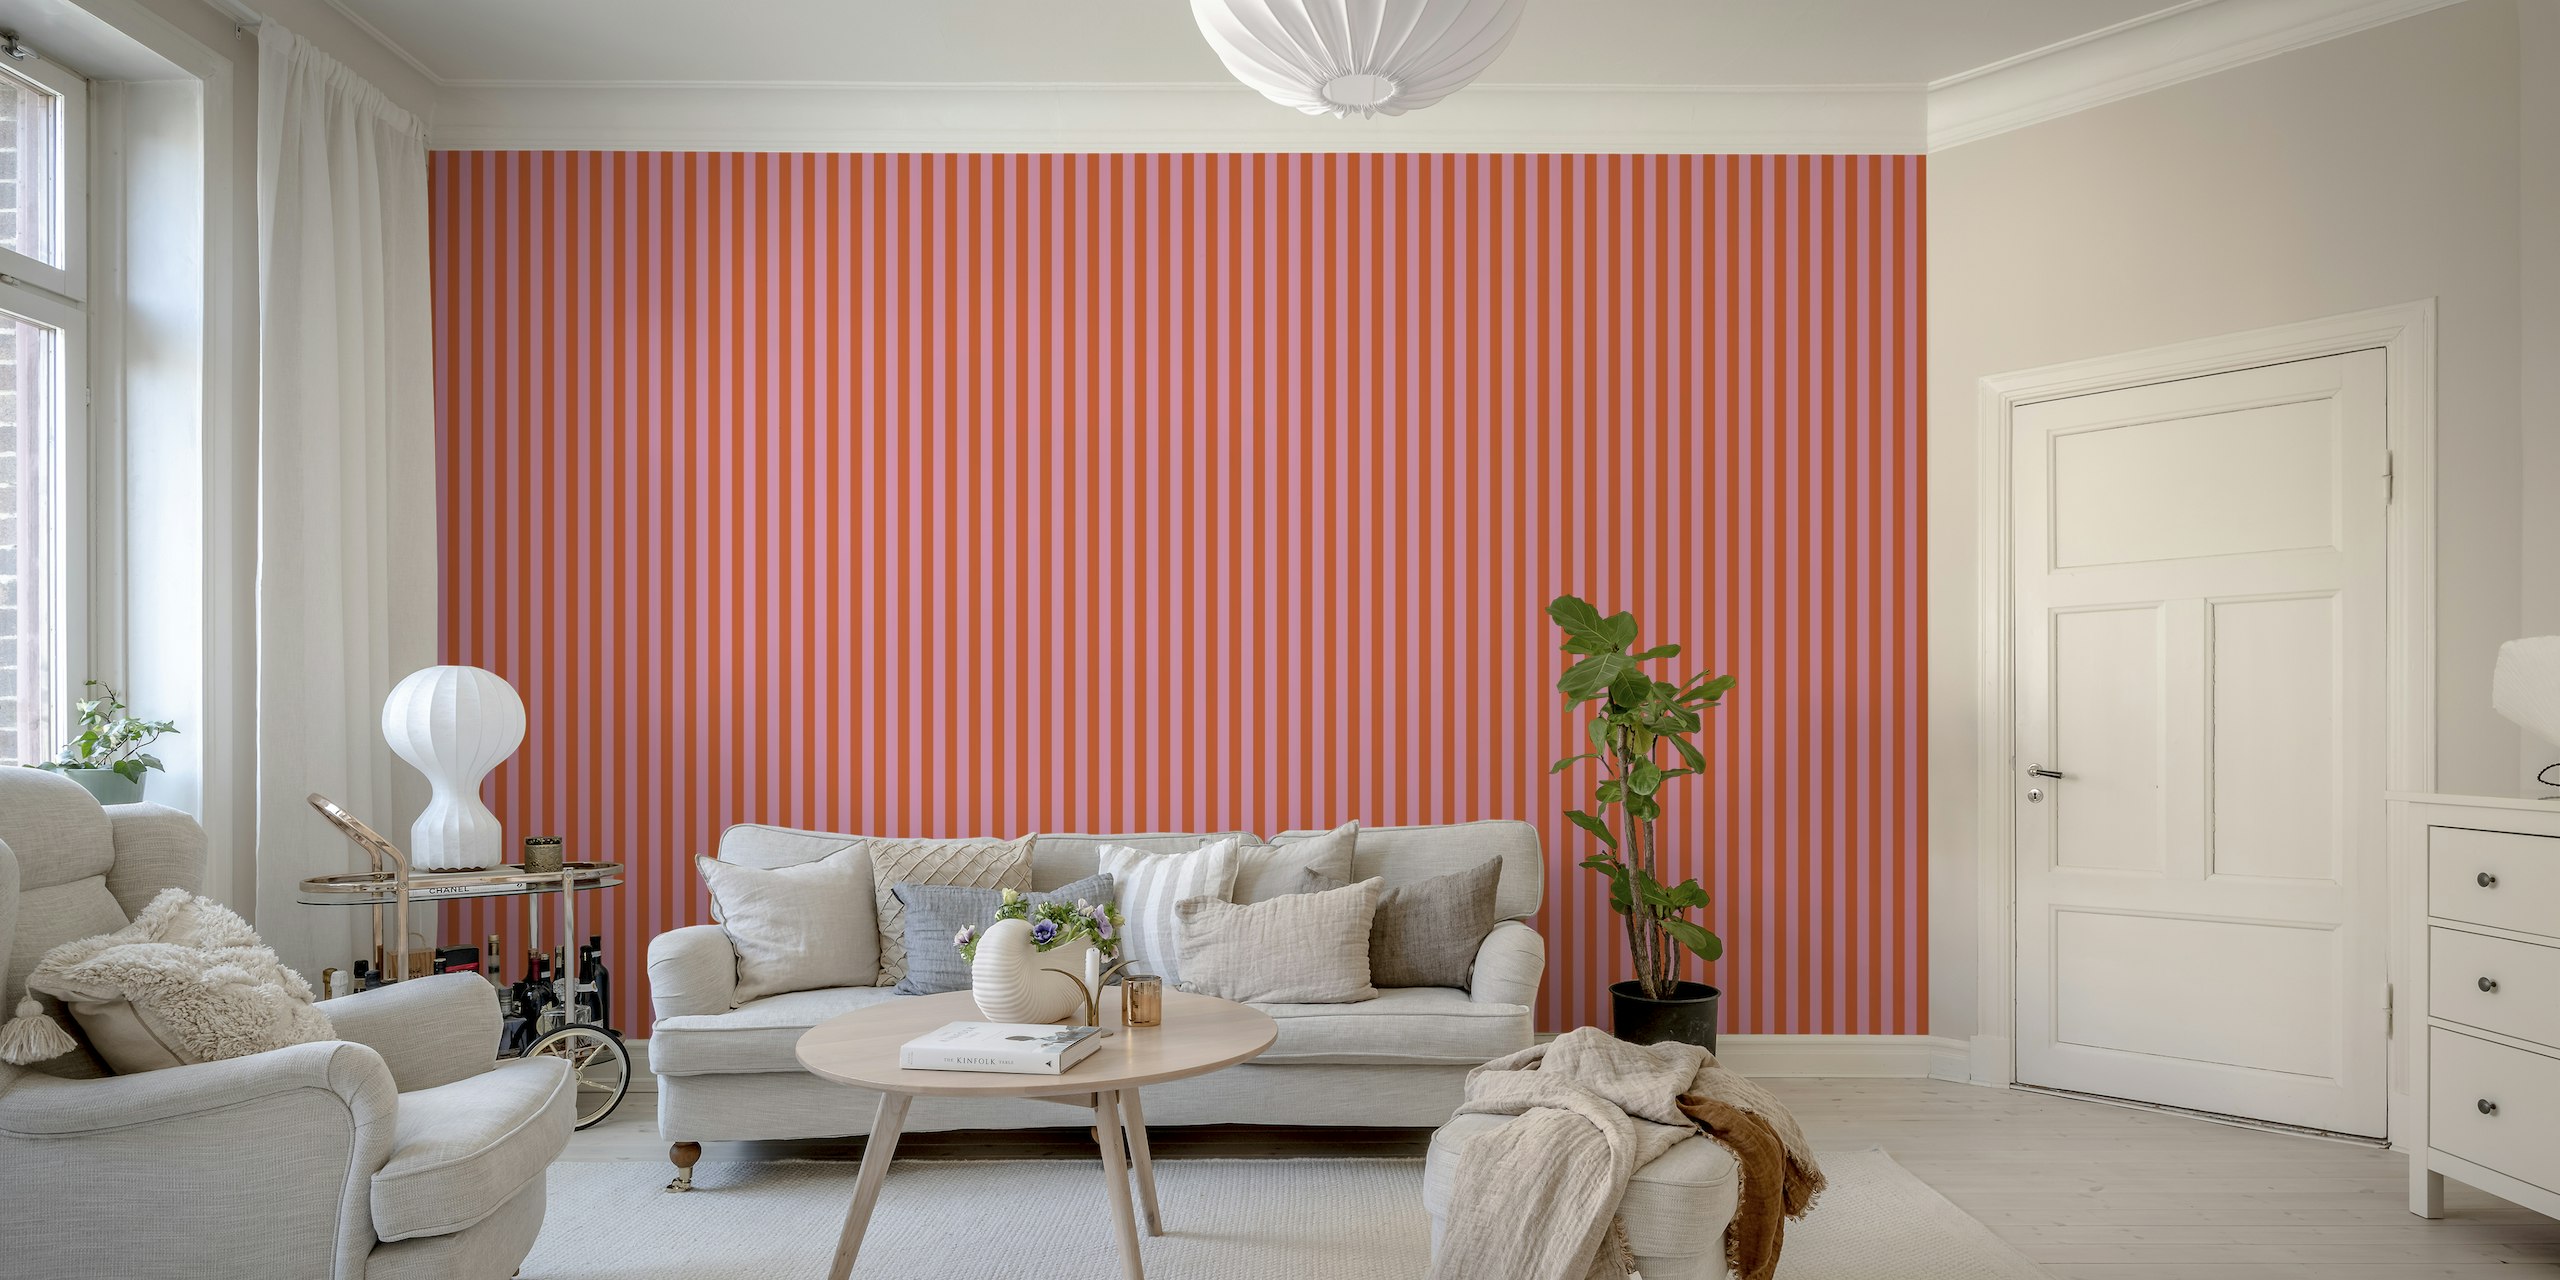 Pink and red awning stripe papel pintado